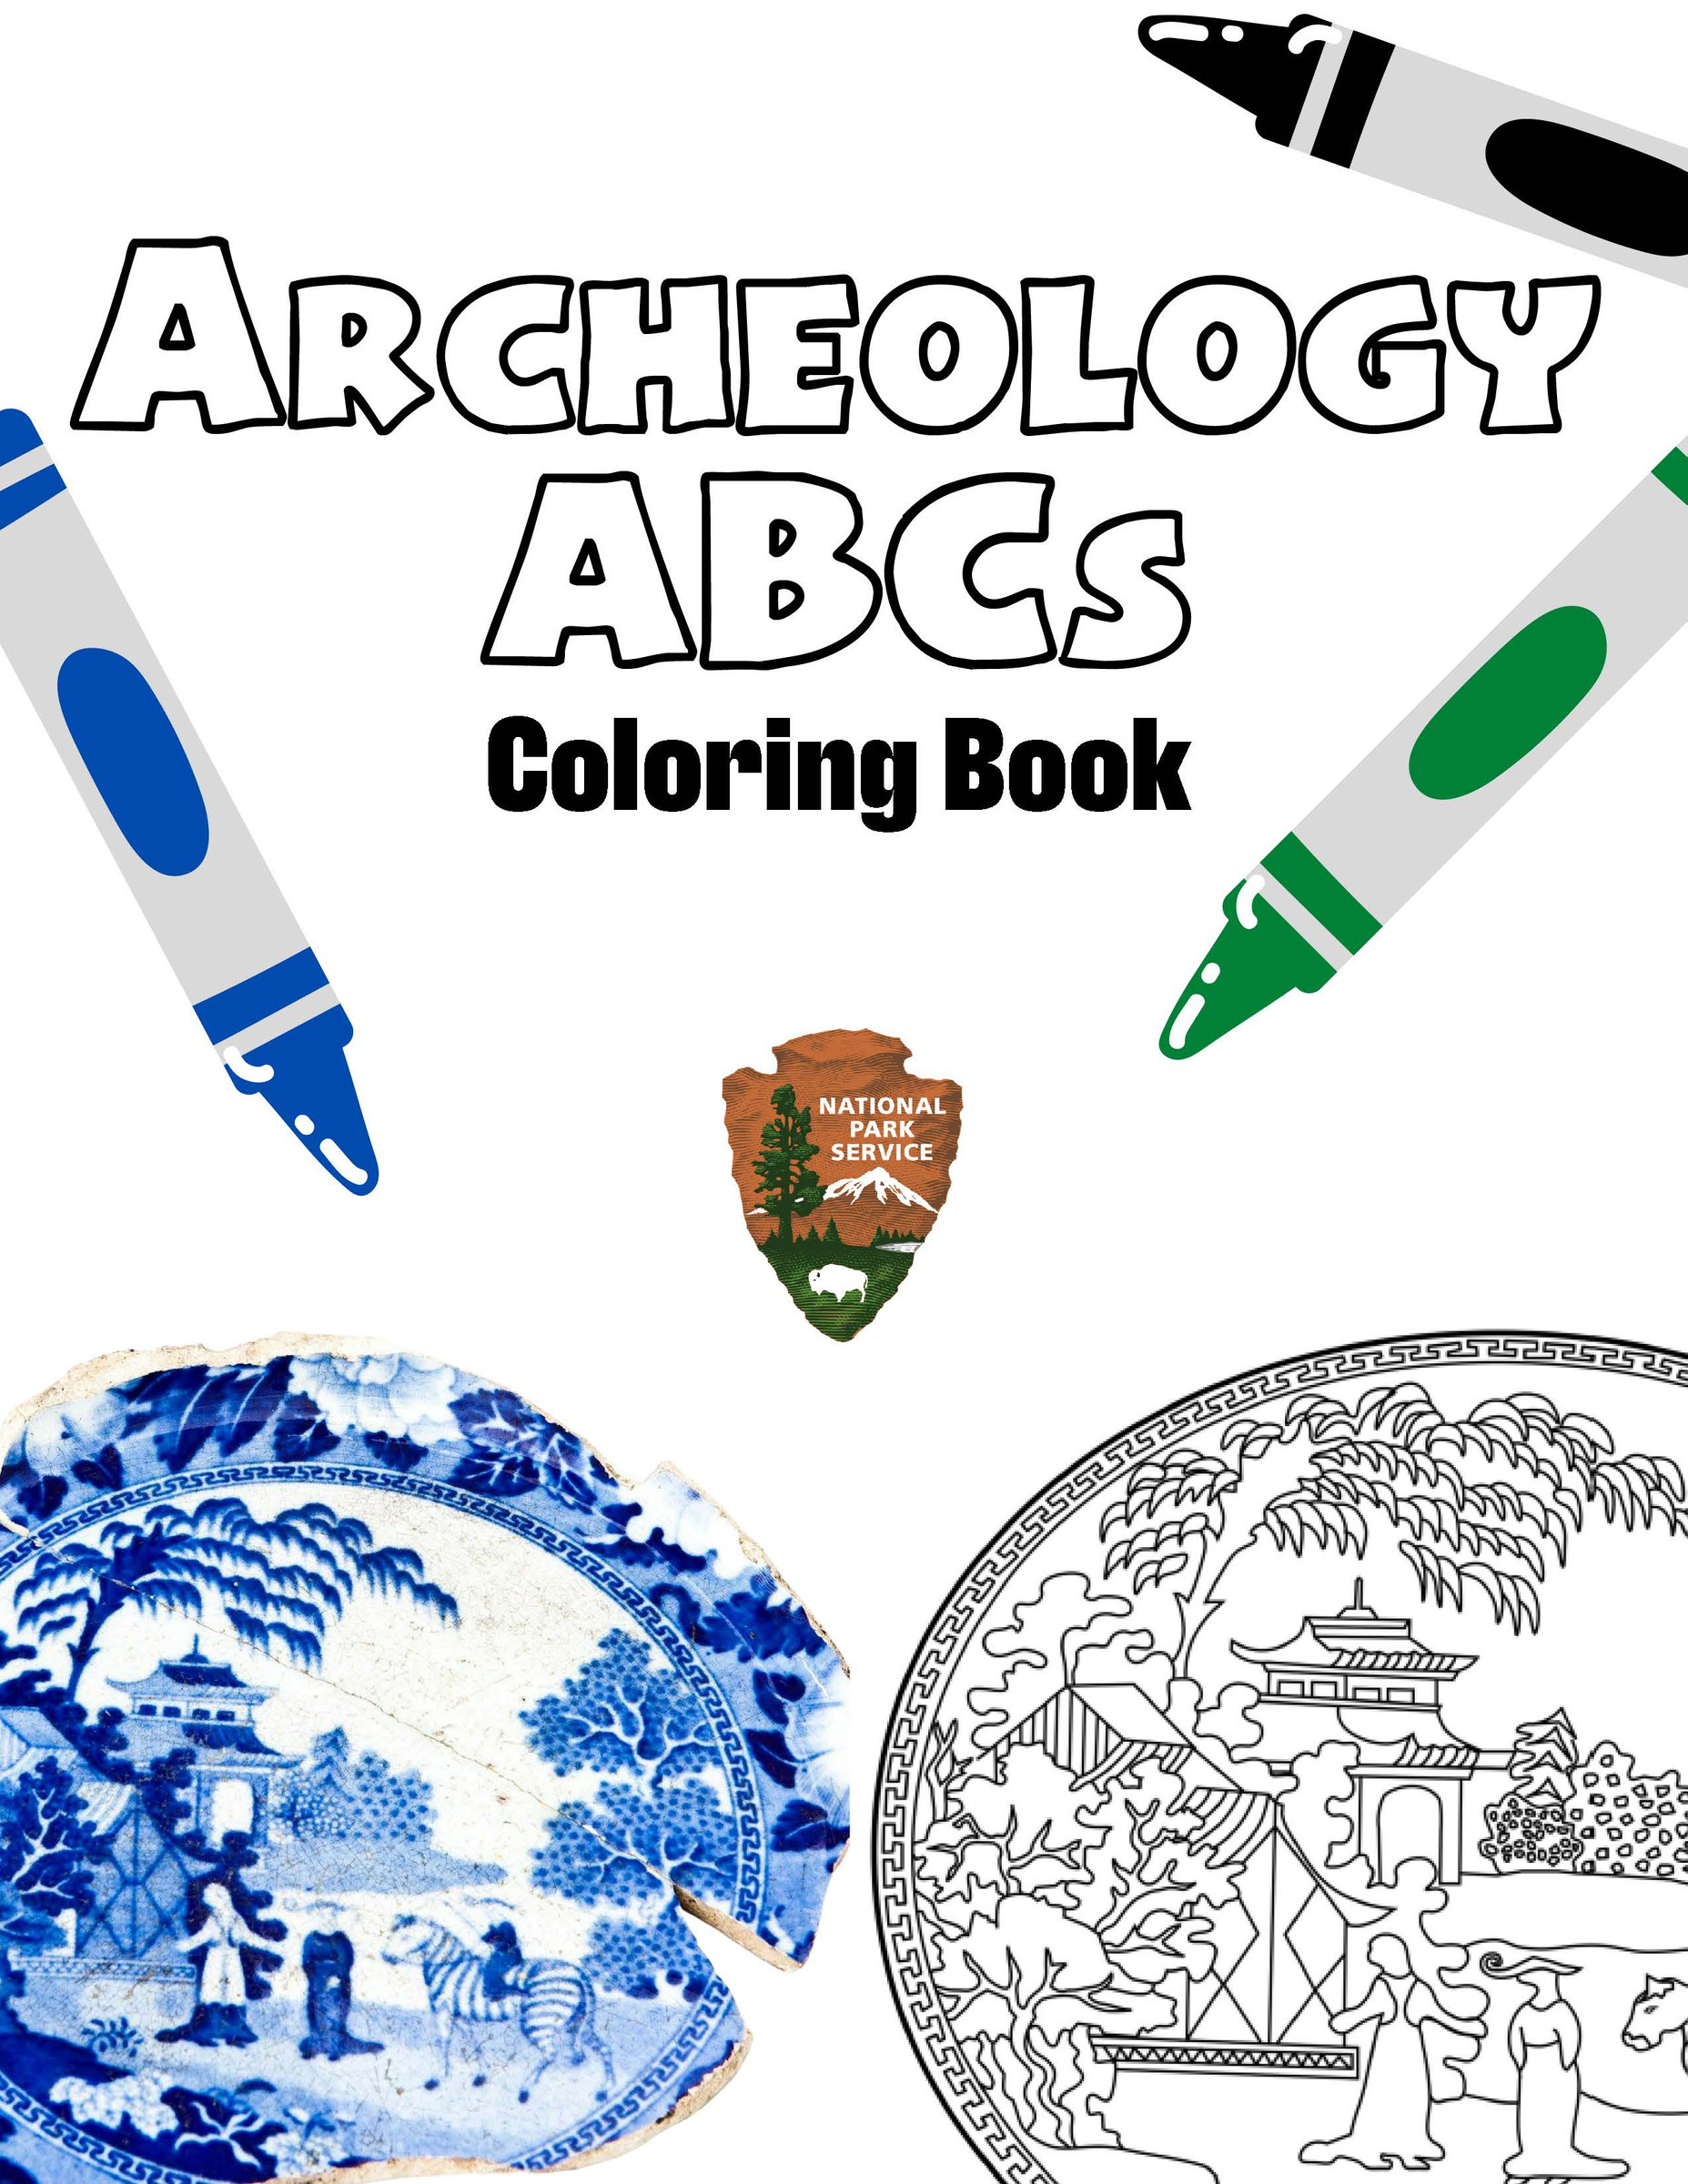 Archeology ABCs Coloring Book (U.S. National Park Service)